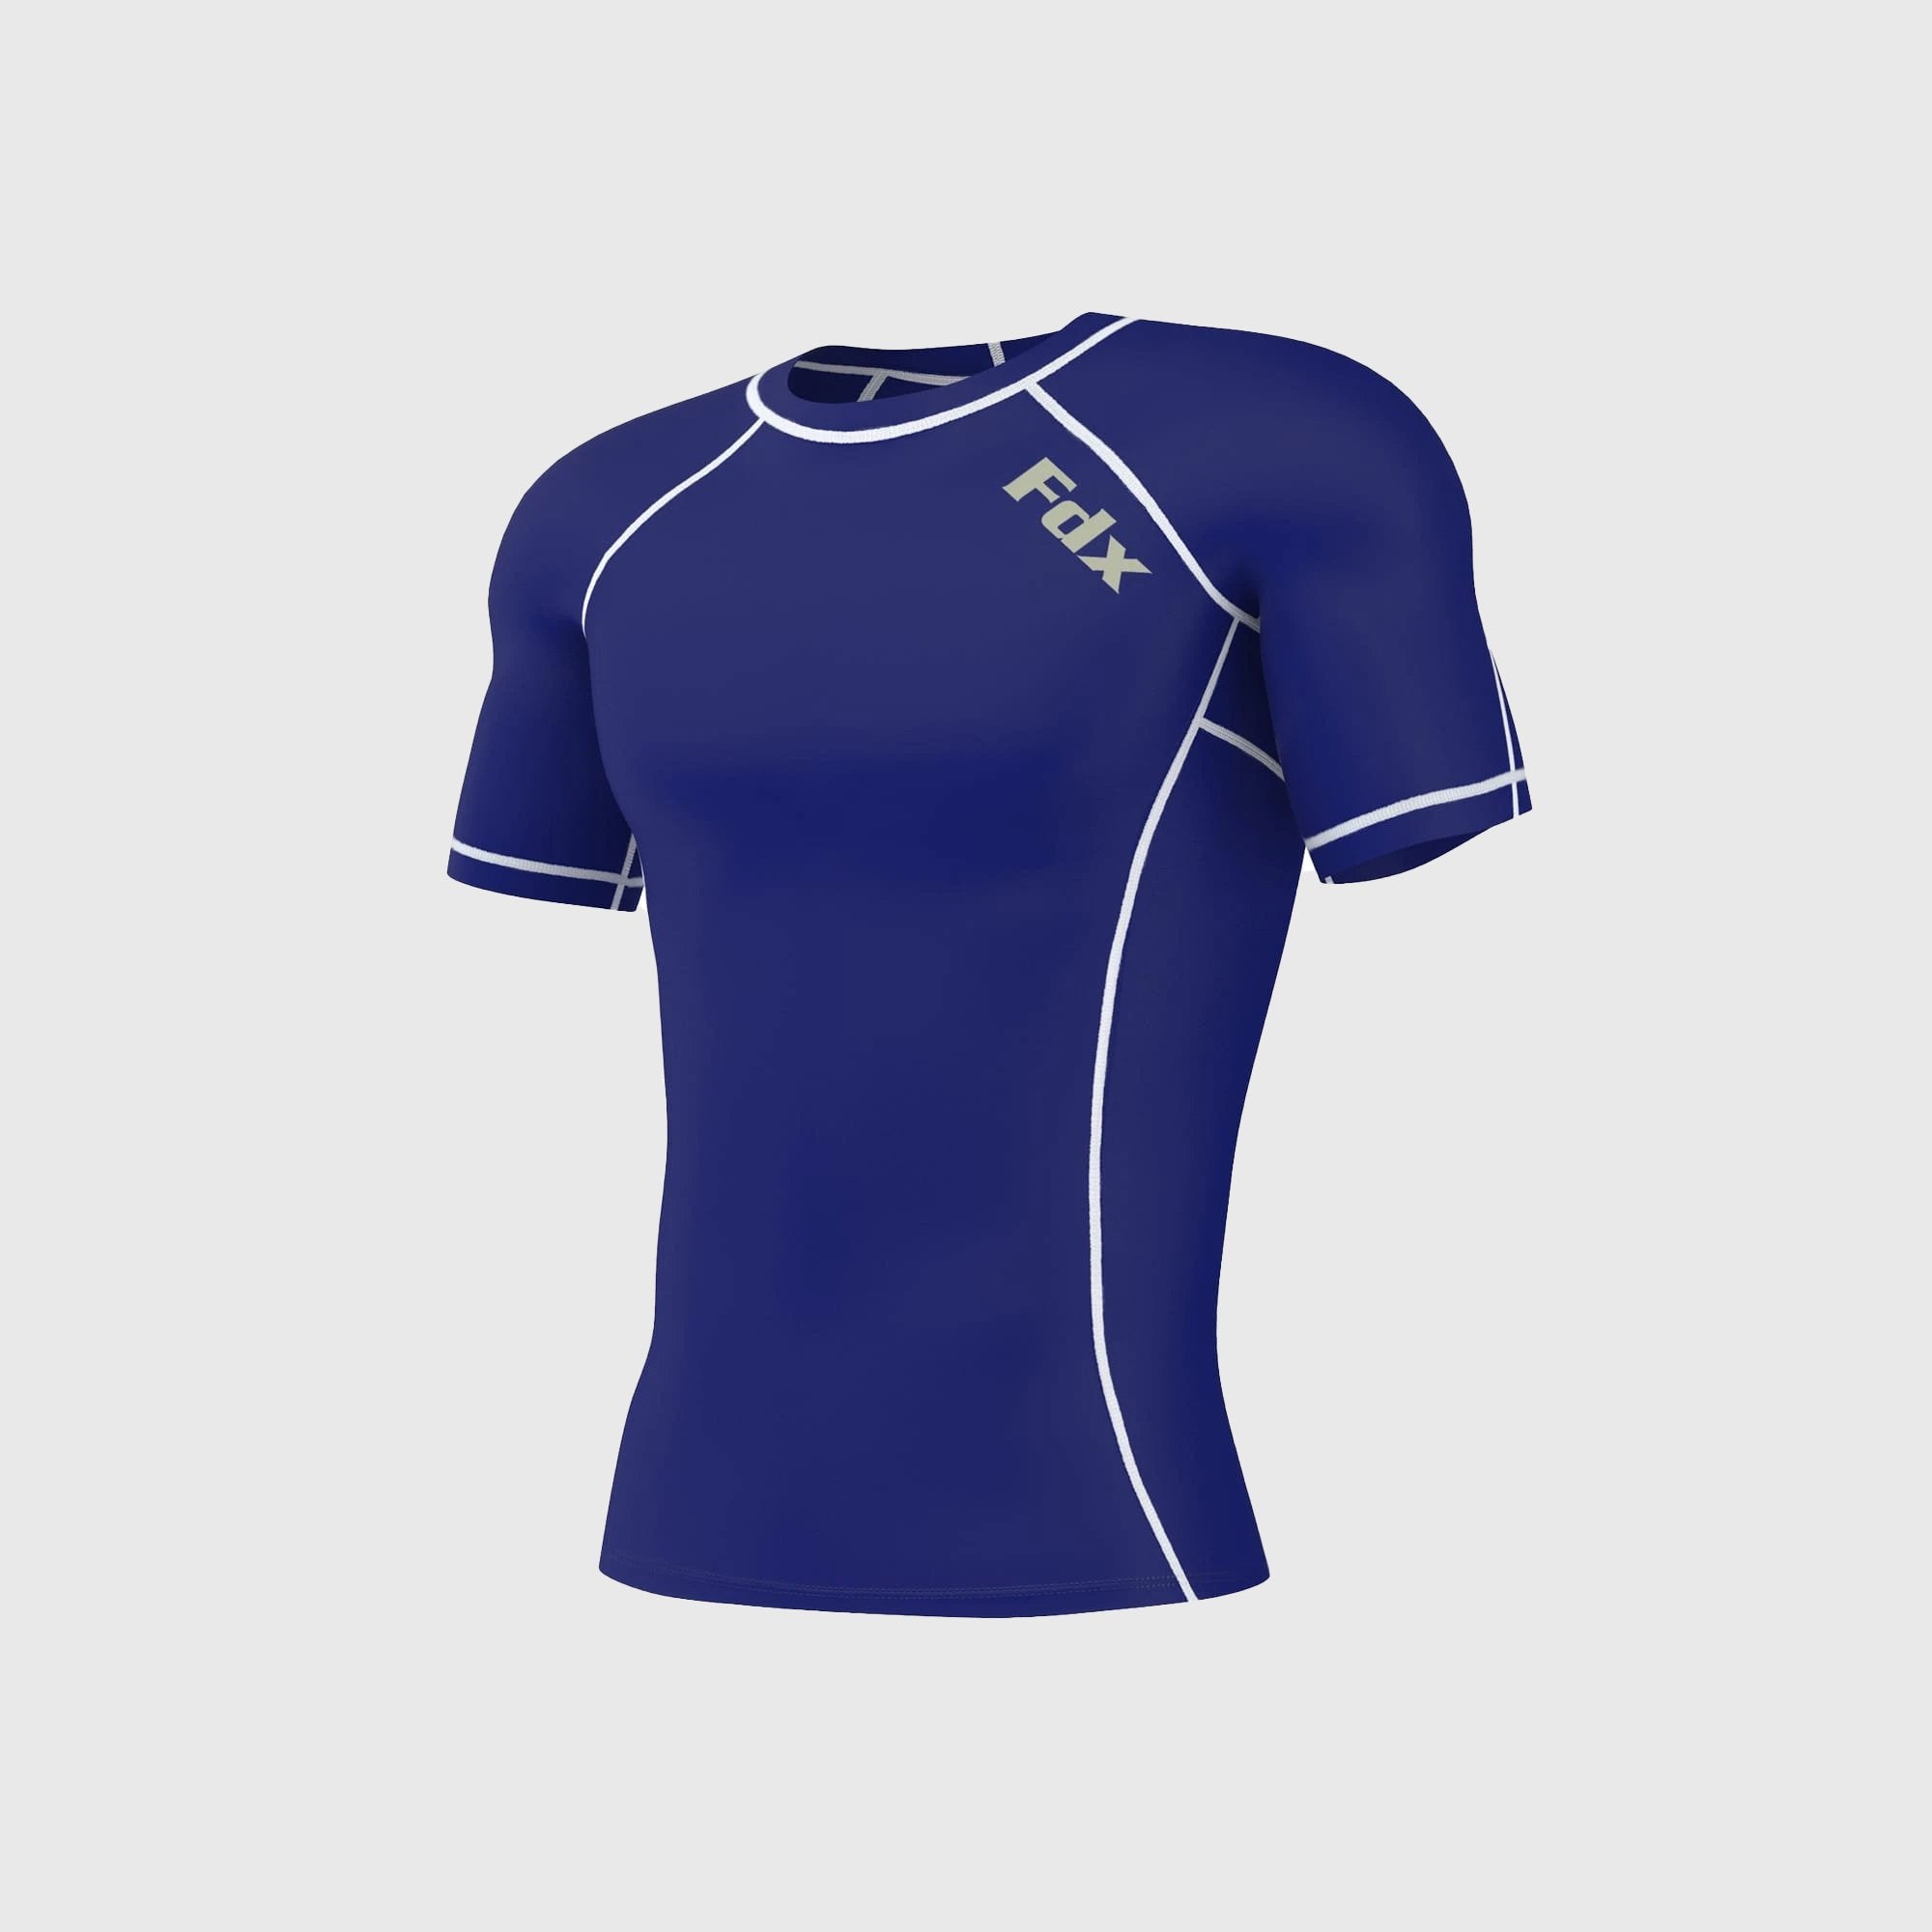 Fdx Cosmic Blue Men's Short Sleeve Base Layer Gym Shirt